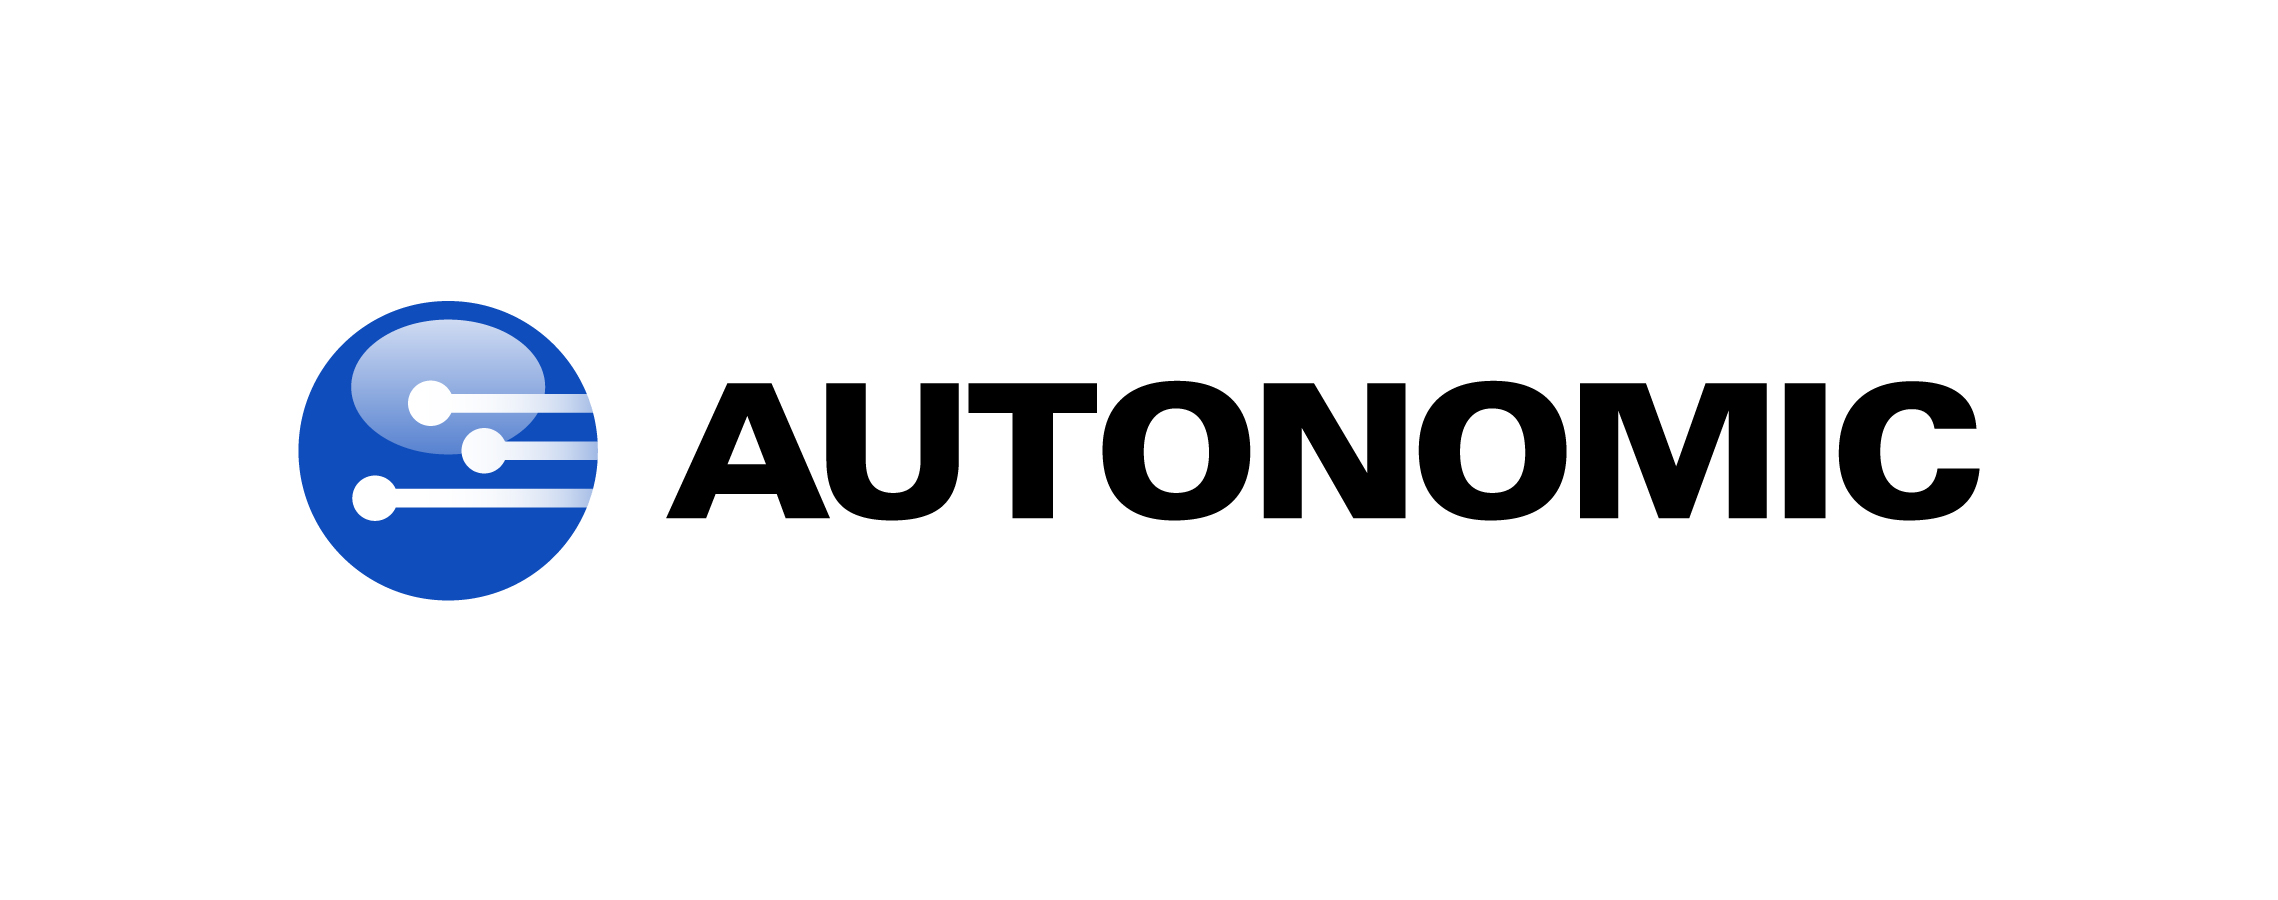 autonomic_logo.jpg